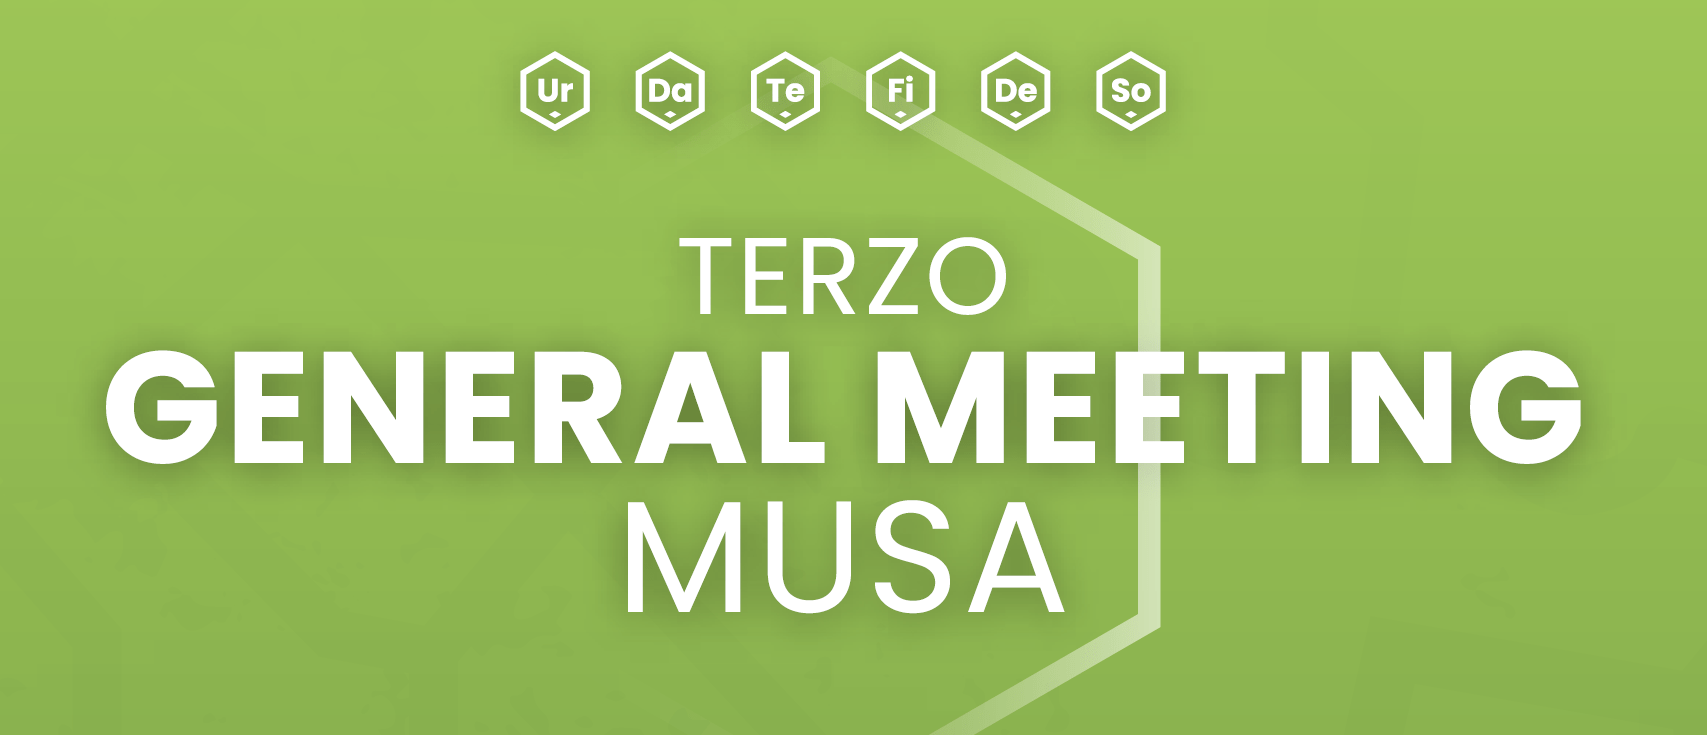 General Meeting MUSA